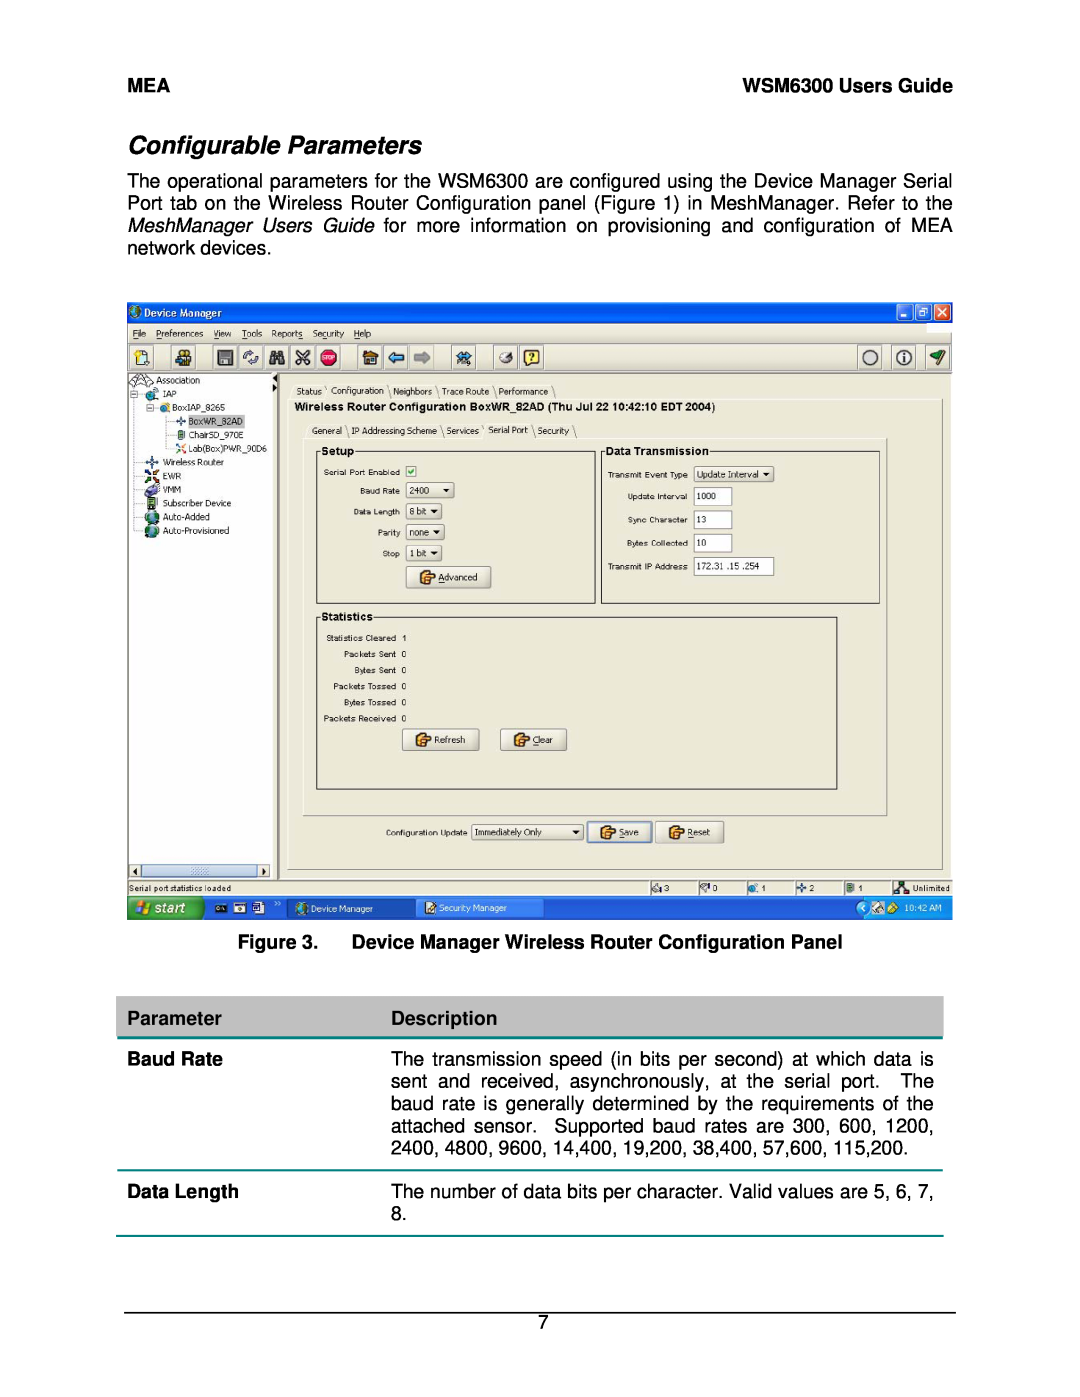 Motorola WSM6300 manual Configurable Parameters, Device Manager Wireless Router Configuration Panel, Description, Baud Rate 